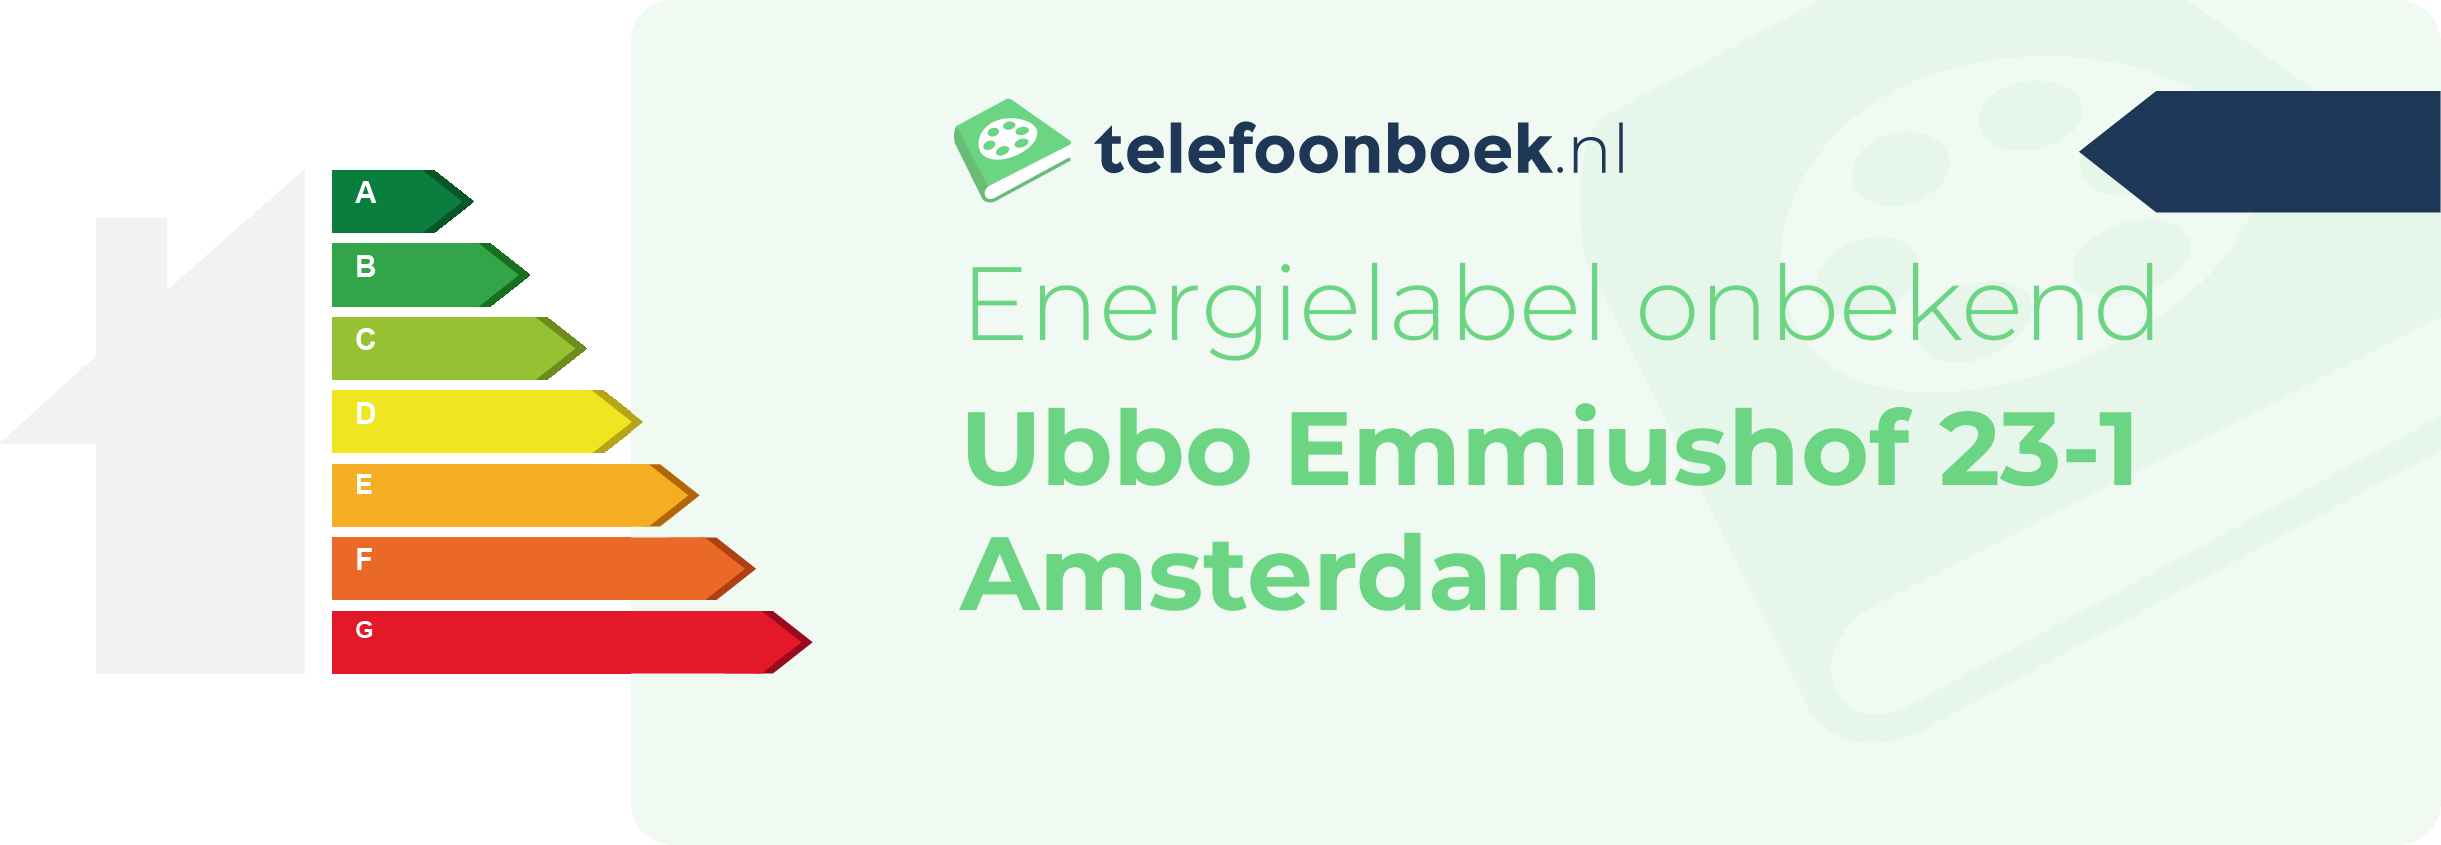 Energielabel Ubbo Emmiushof 23-1 Amsterdam